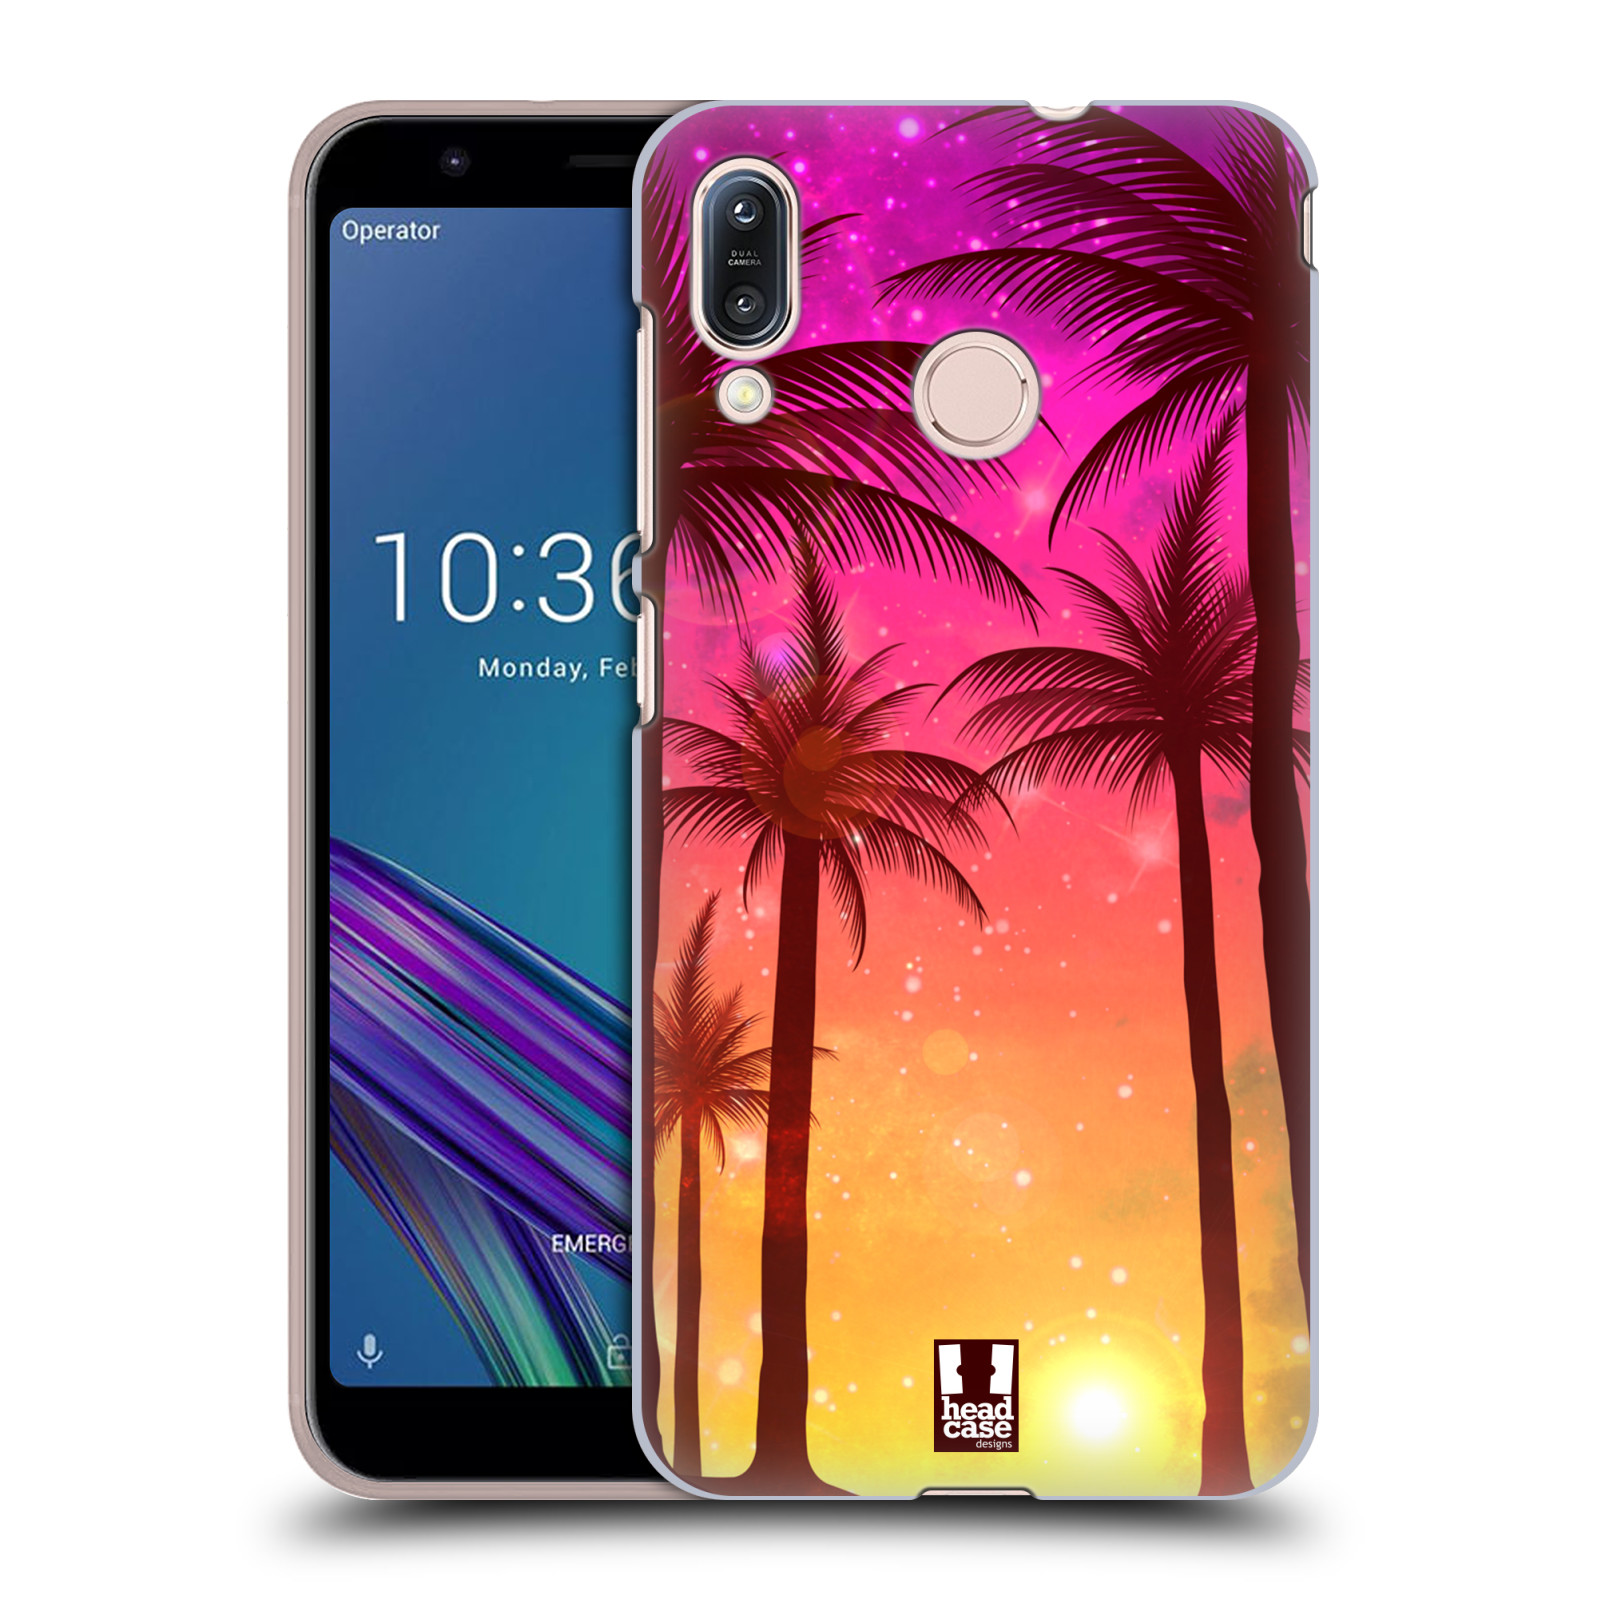 Pouzdro na mobil Asus Zenfone Max M1 (ZB555KL) - HEAD CASE - vzor Kreslený motiv silueta moře a palmy RŮŽOVÁ